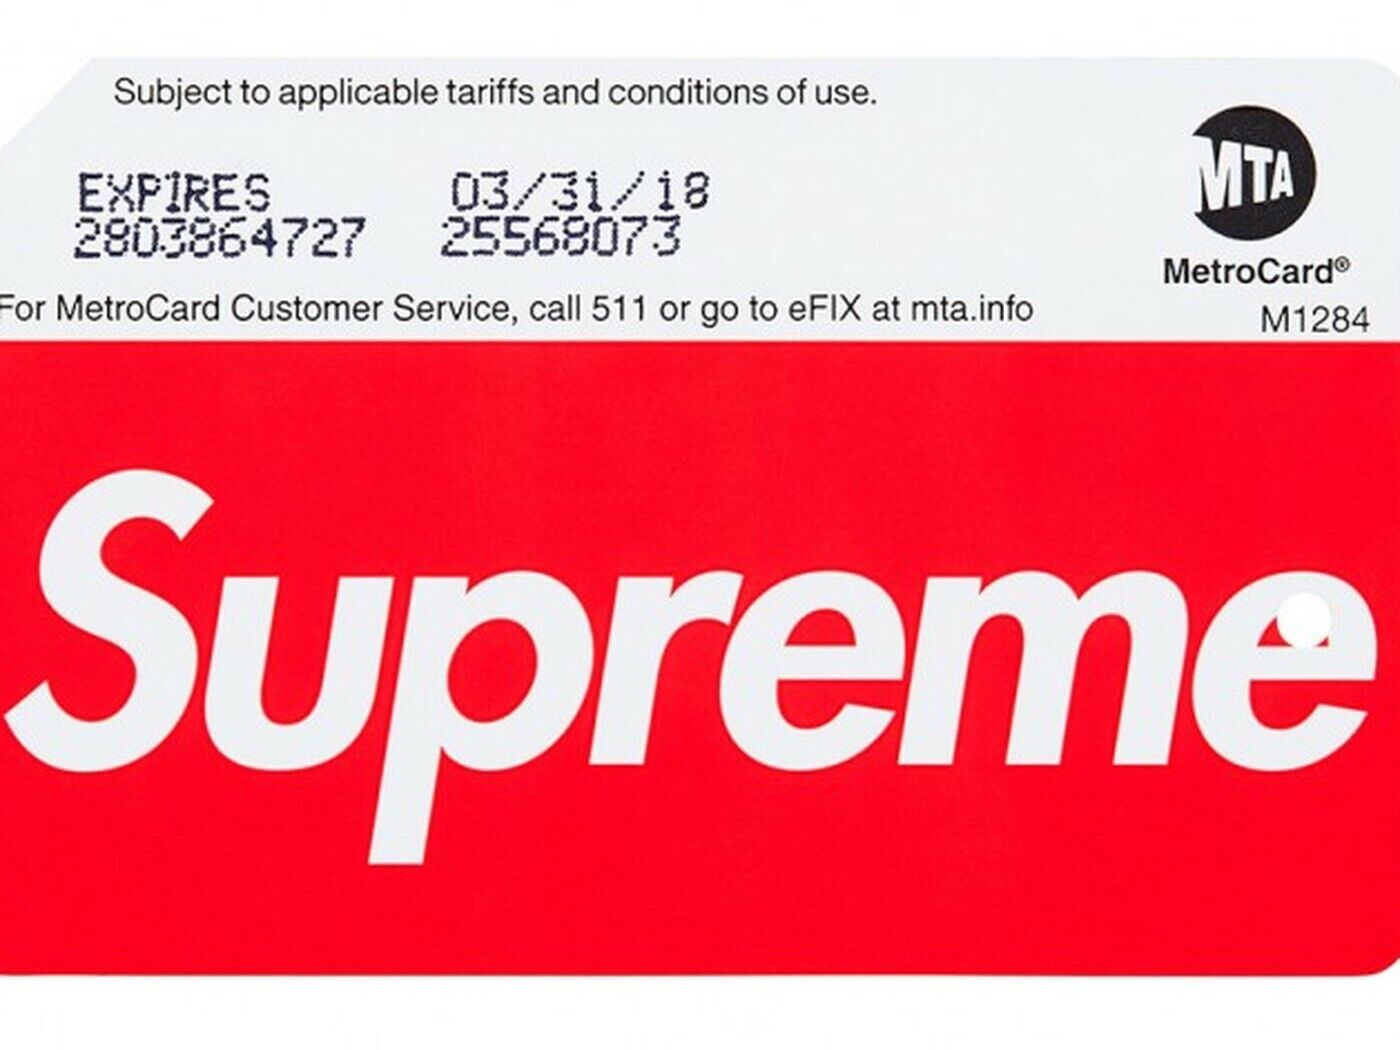 Supreme Metro Card Brand NYC MTA EXPIRED